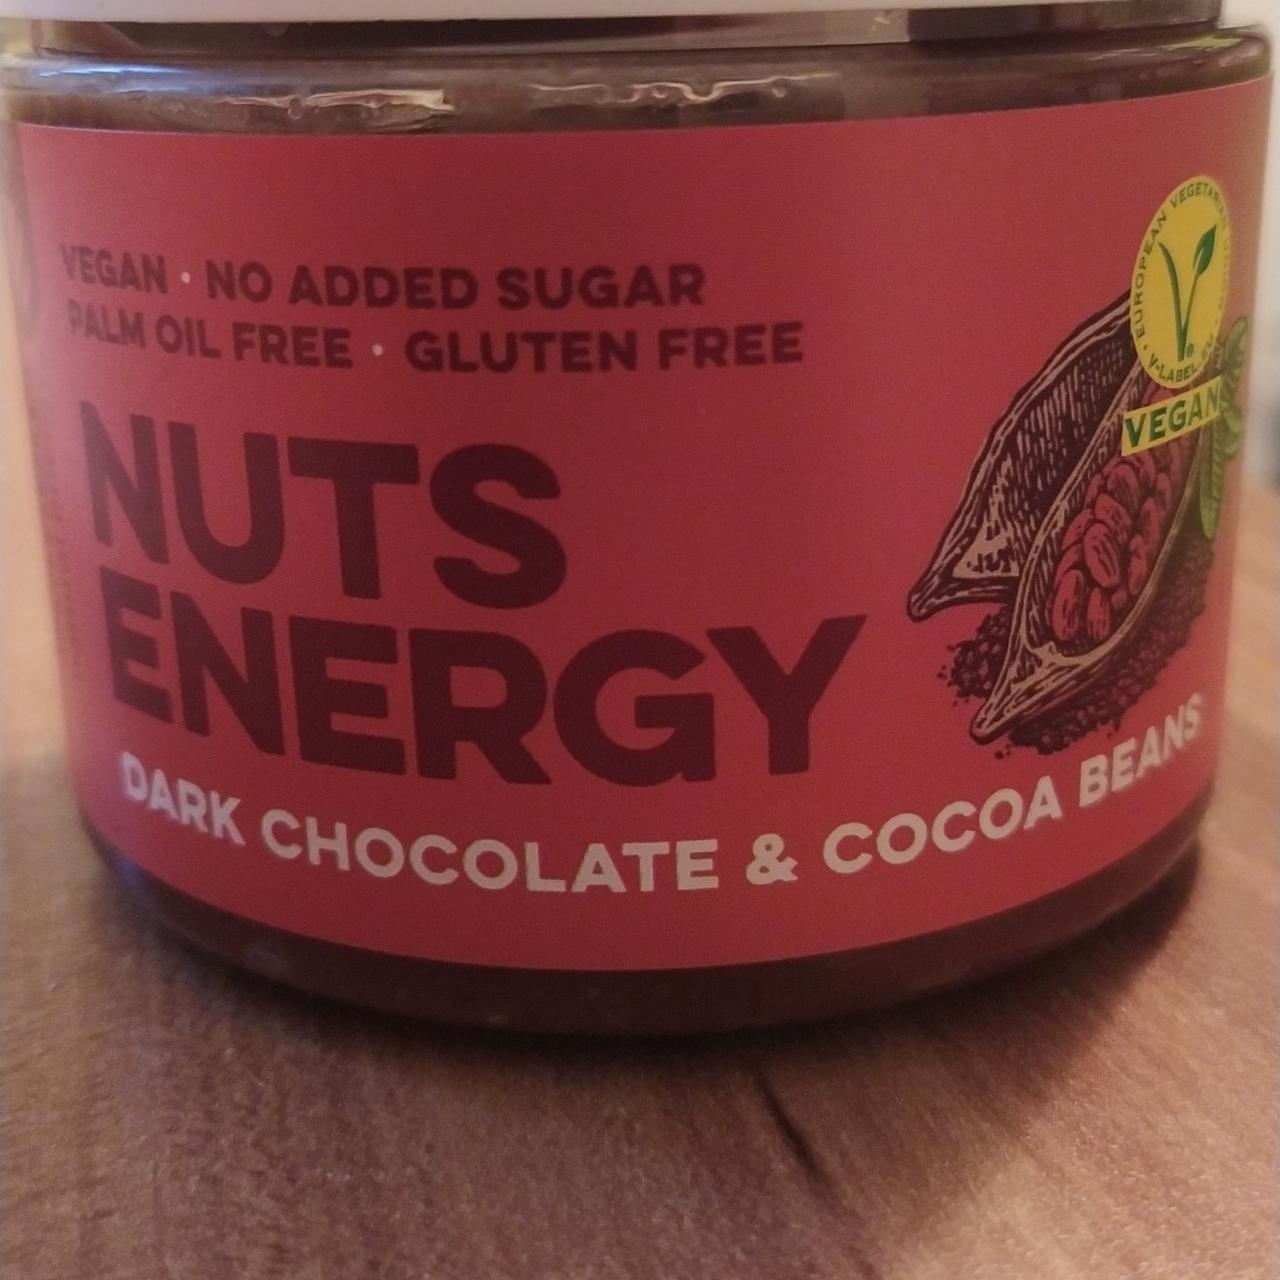 Fotografie - Nuts energy Dark chocolate & Cocoa beans